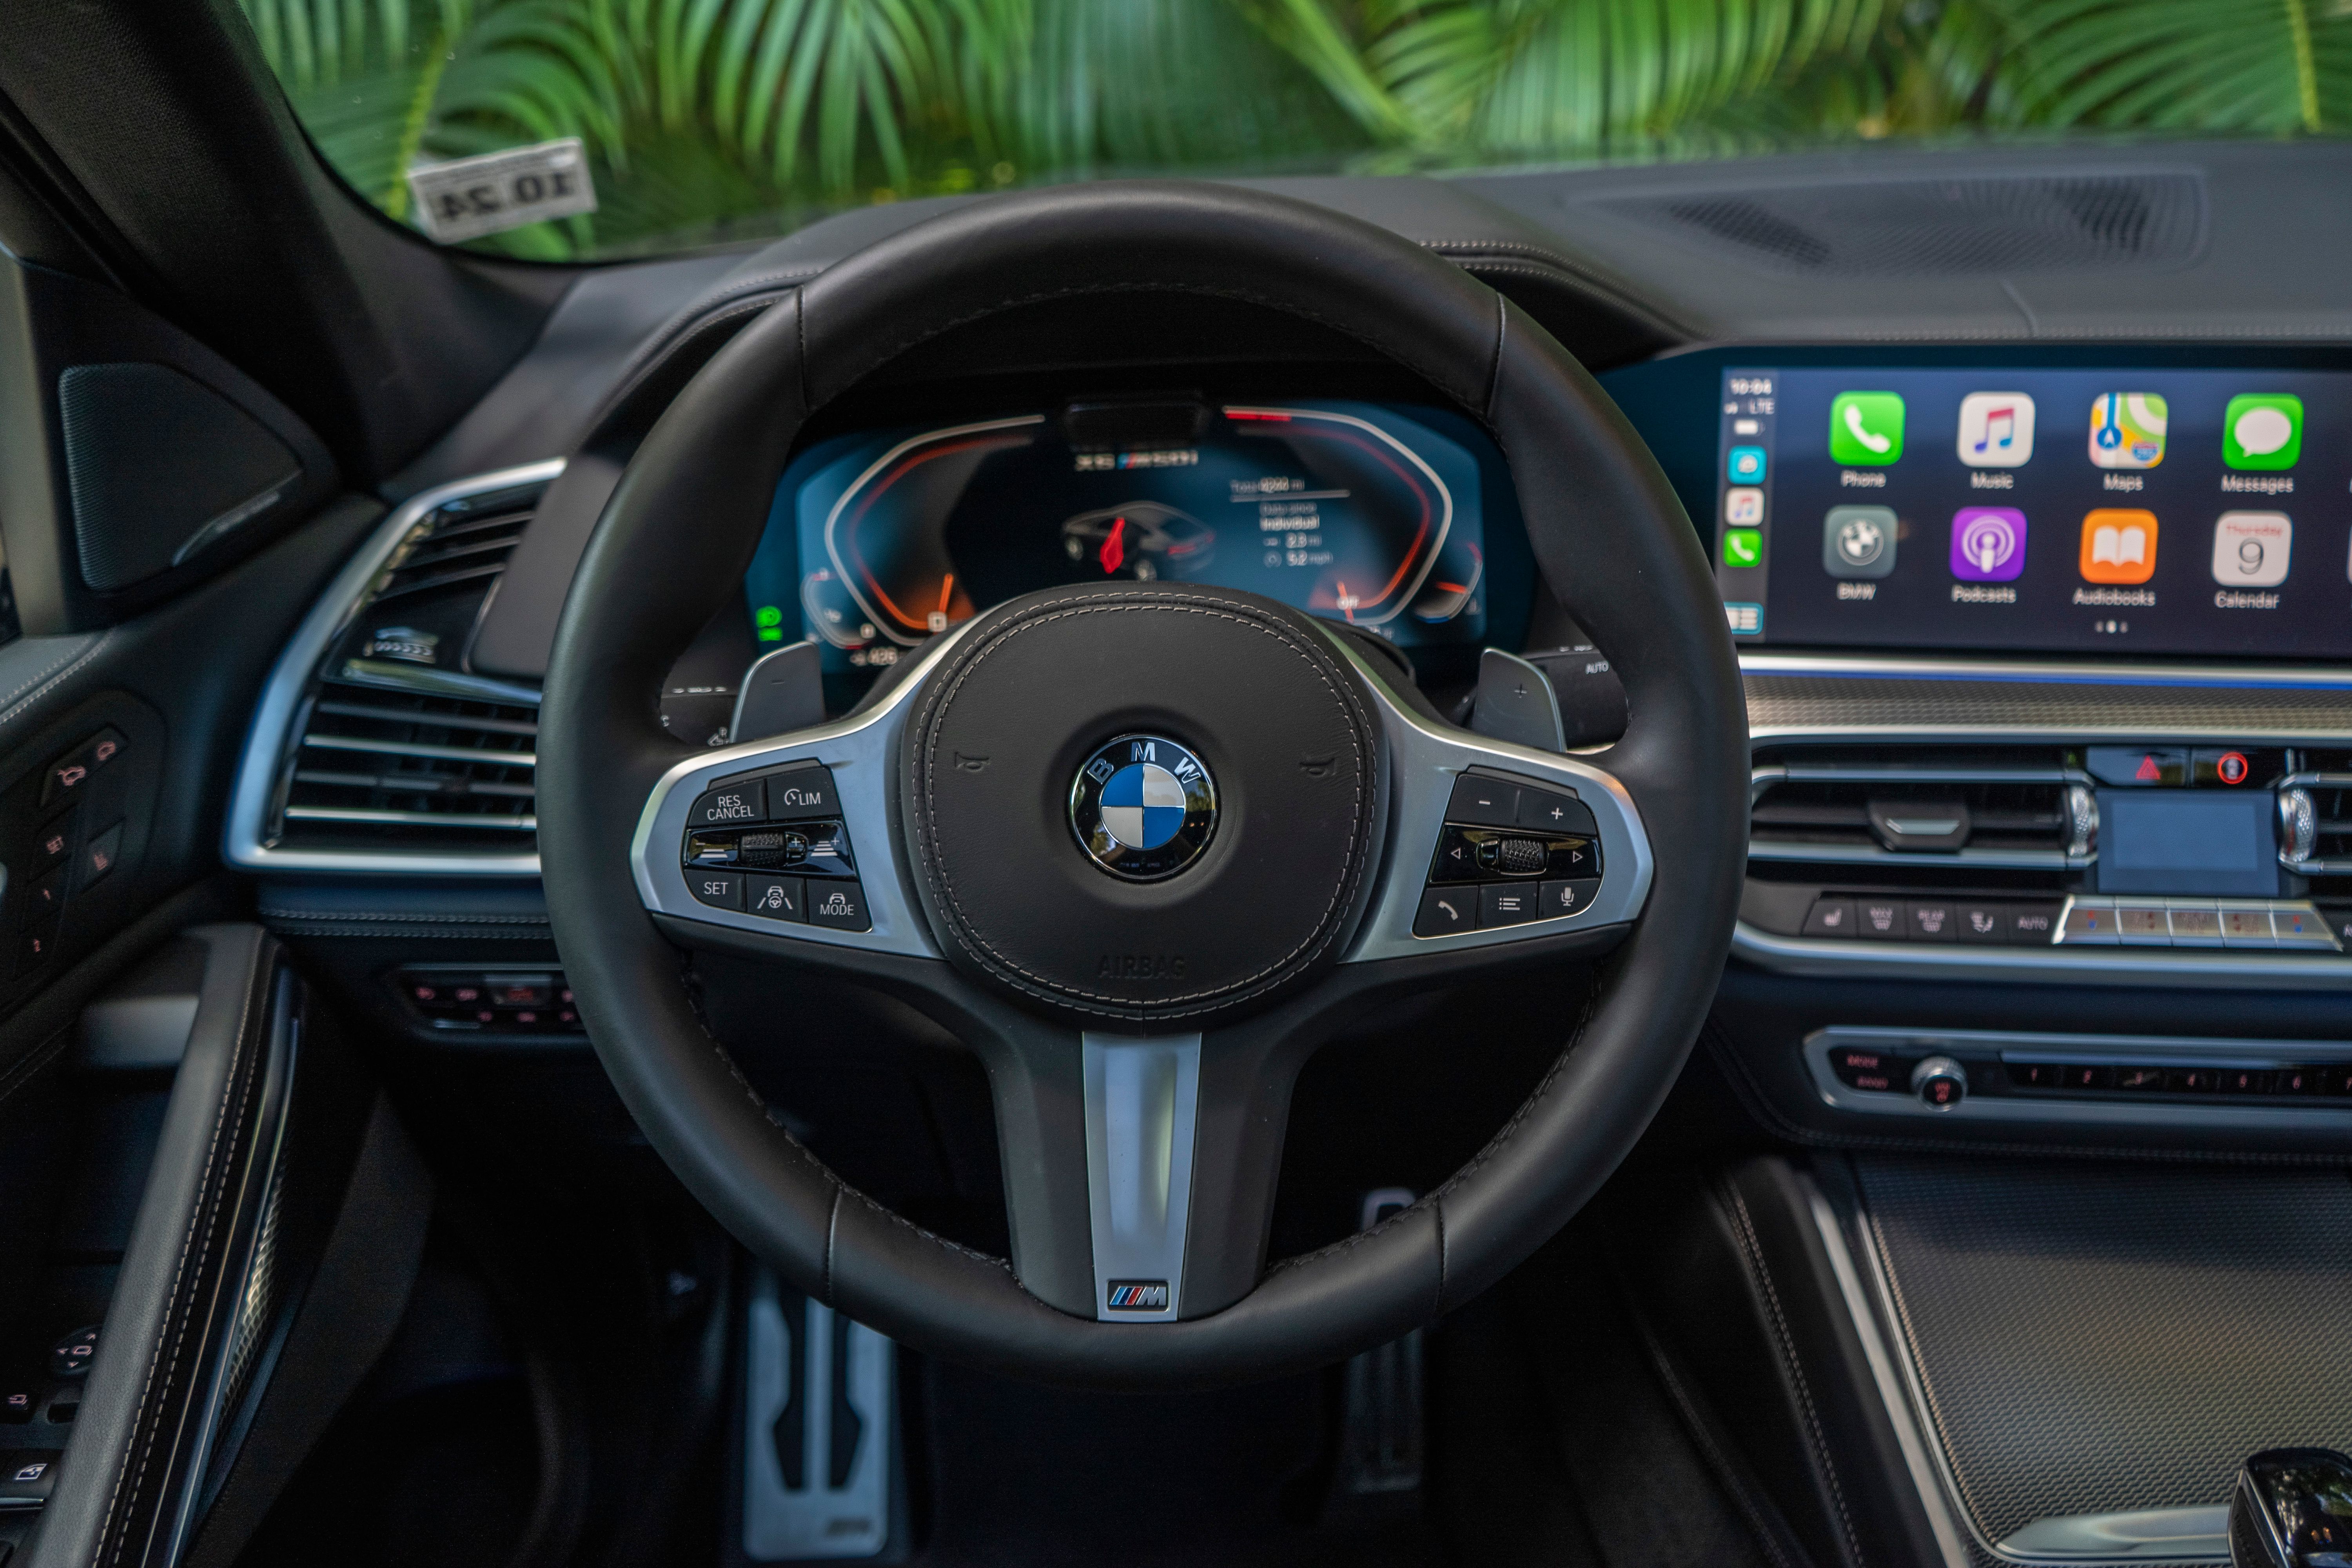 2020 BMW X6 - Driven